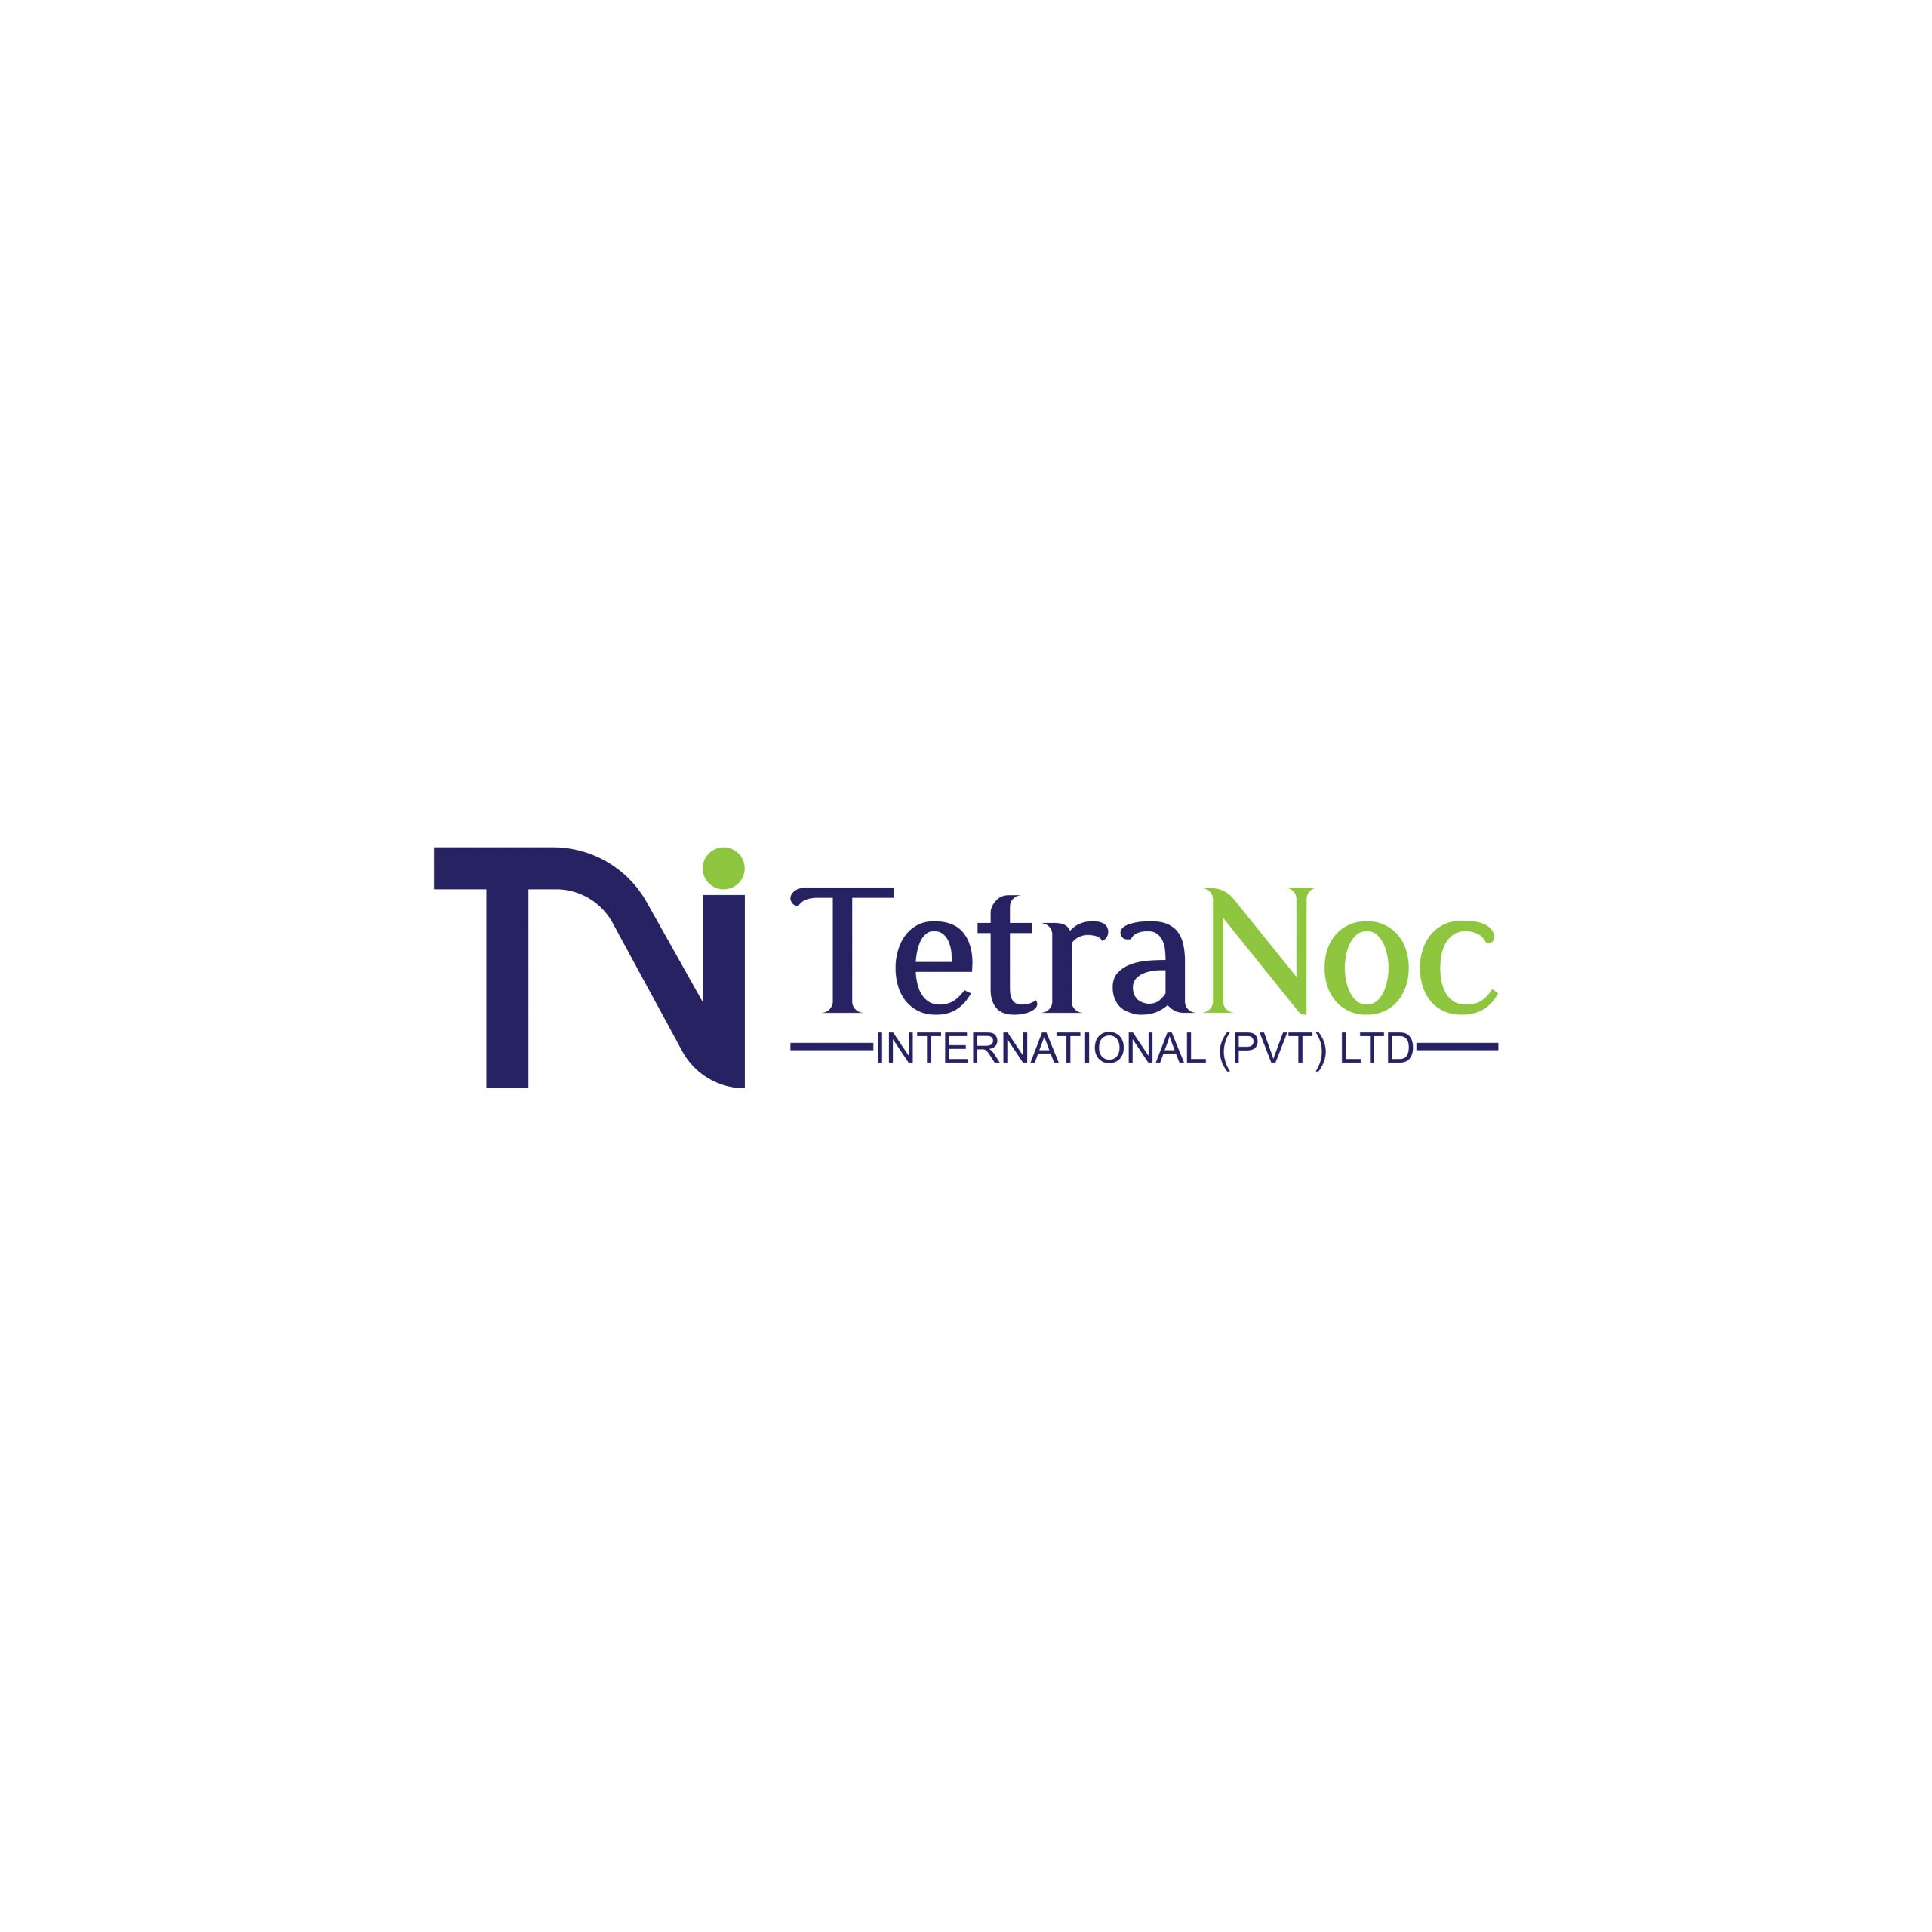 TetraNoc International Private Limited